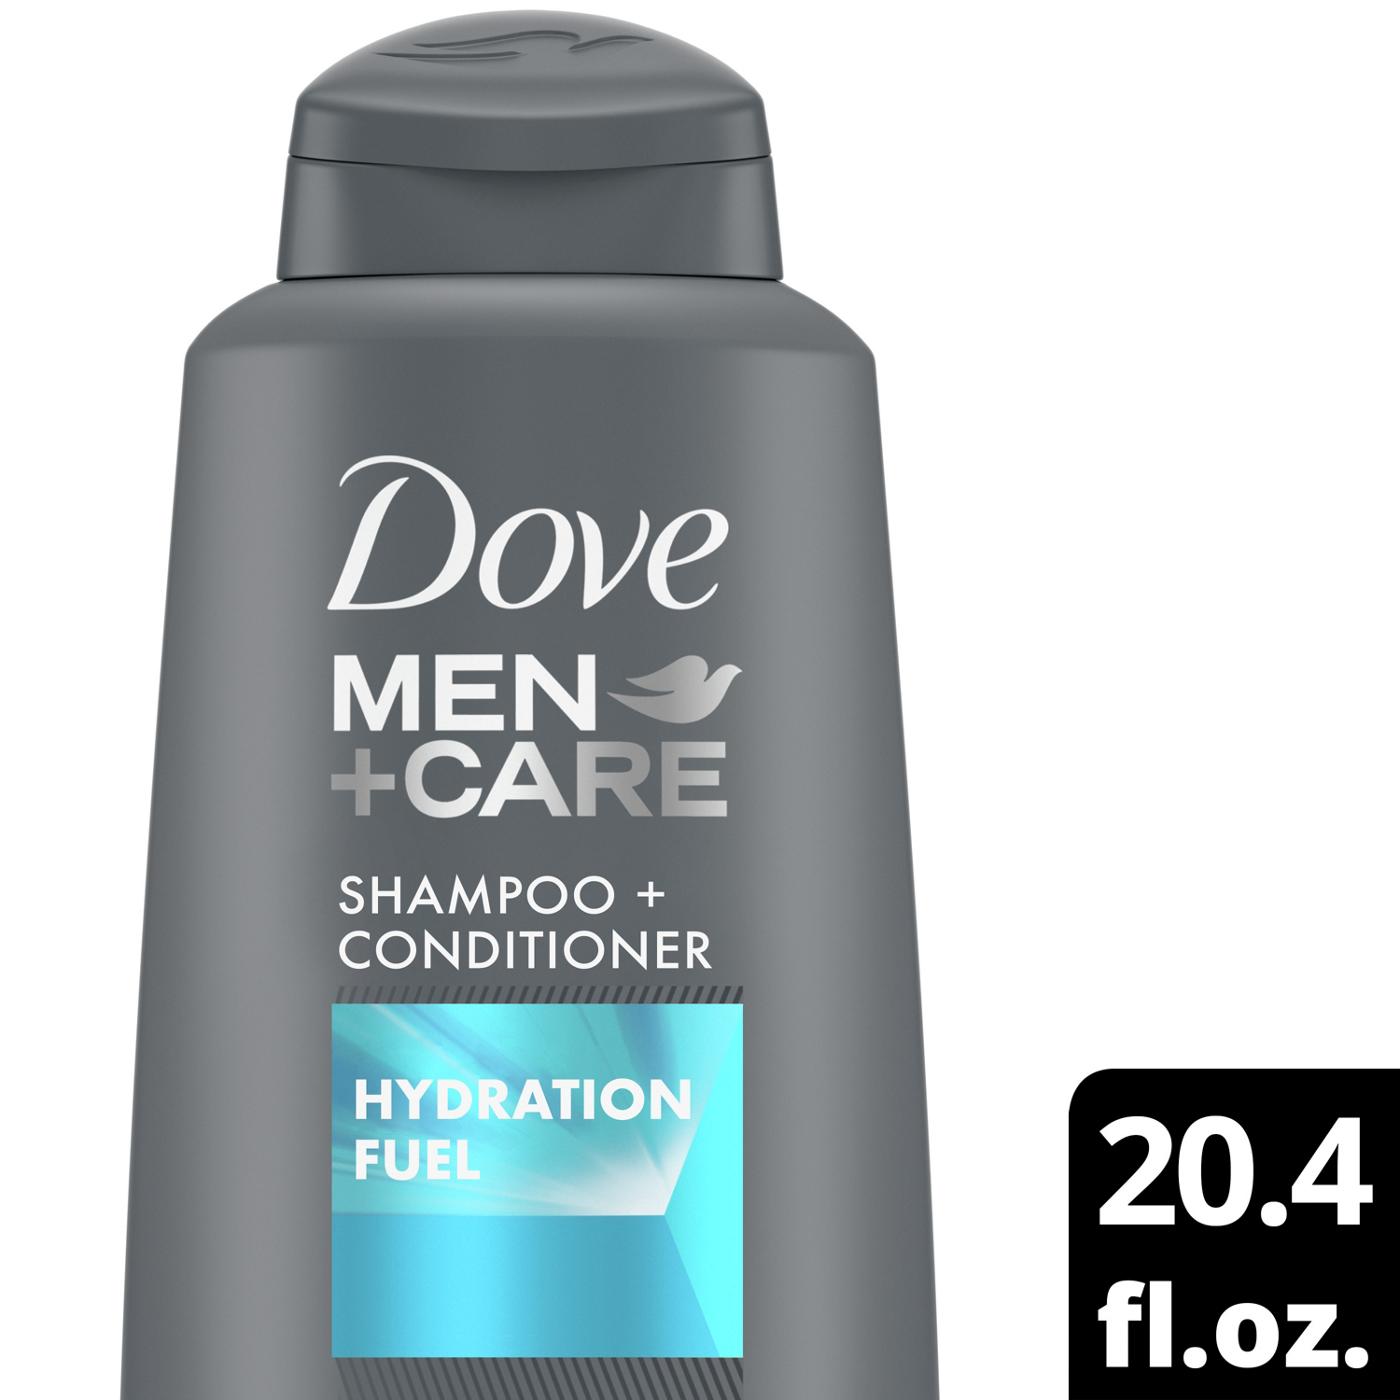 Dove Men+Care 2 in 1 Shampoo + Conditioner - Hydration Fuel; image 3 of 6